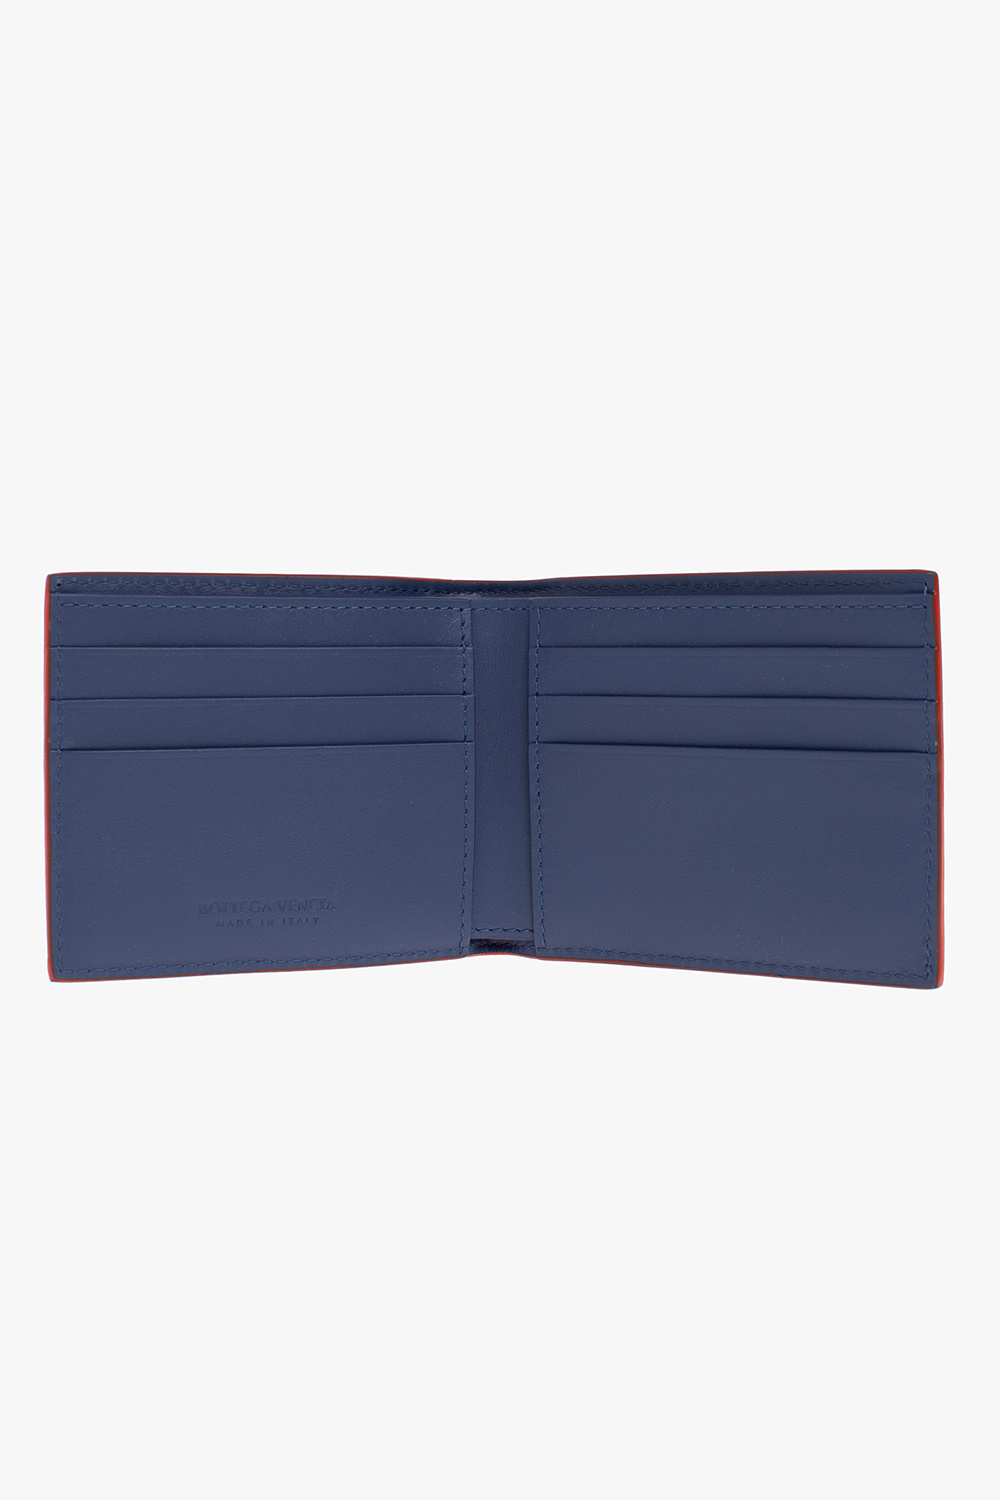 Bottega Veneta Folding wallet